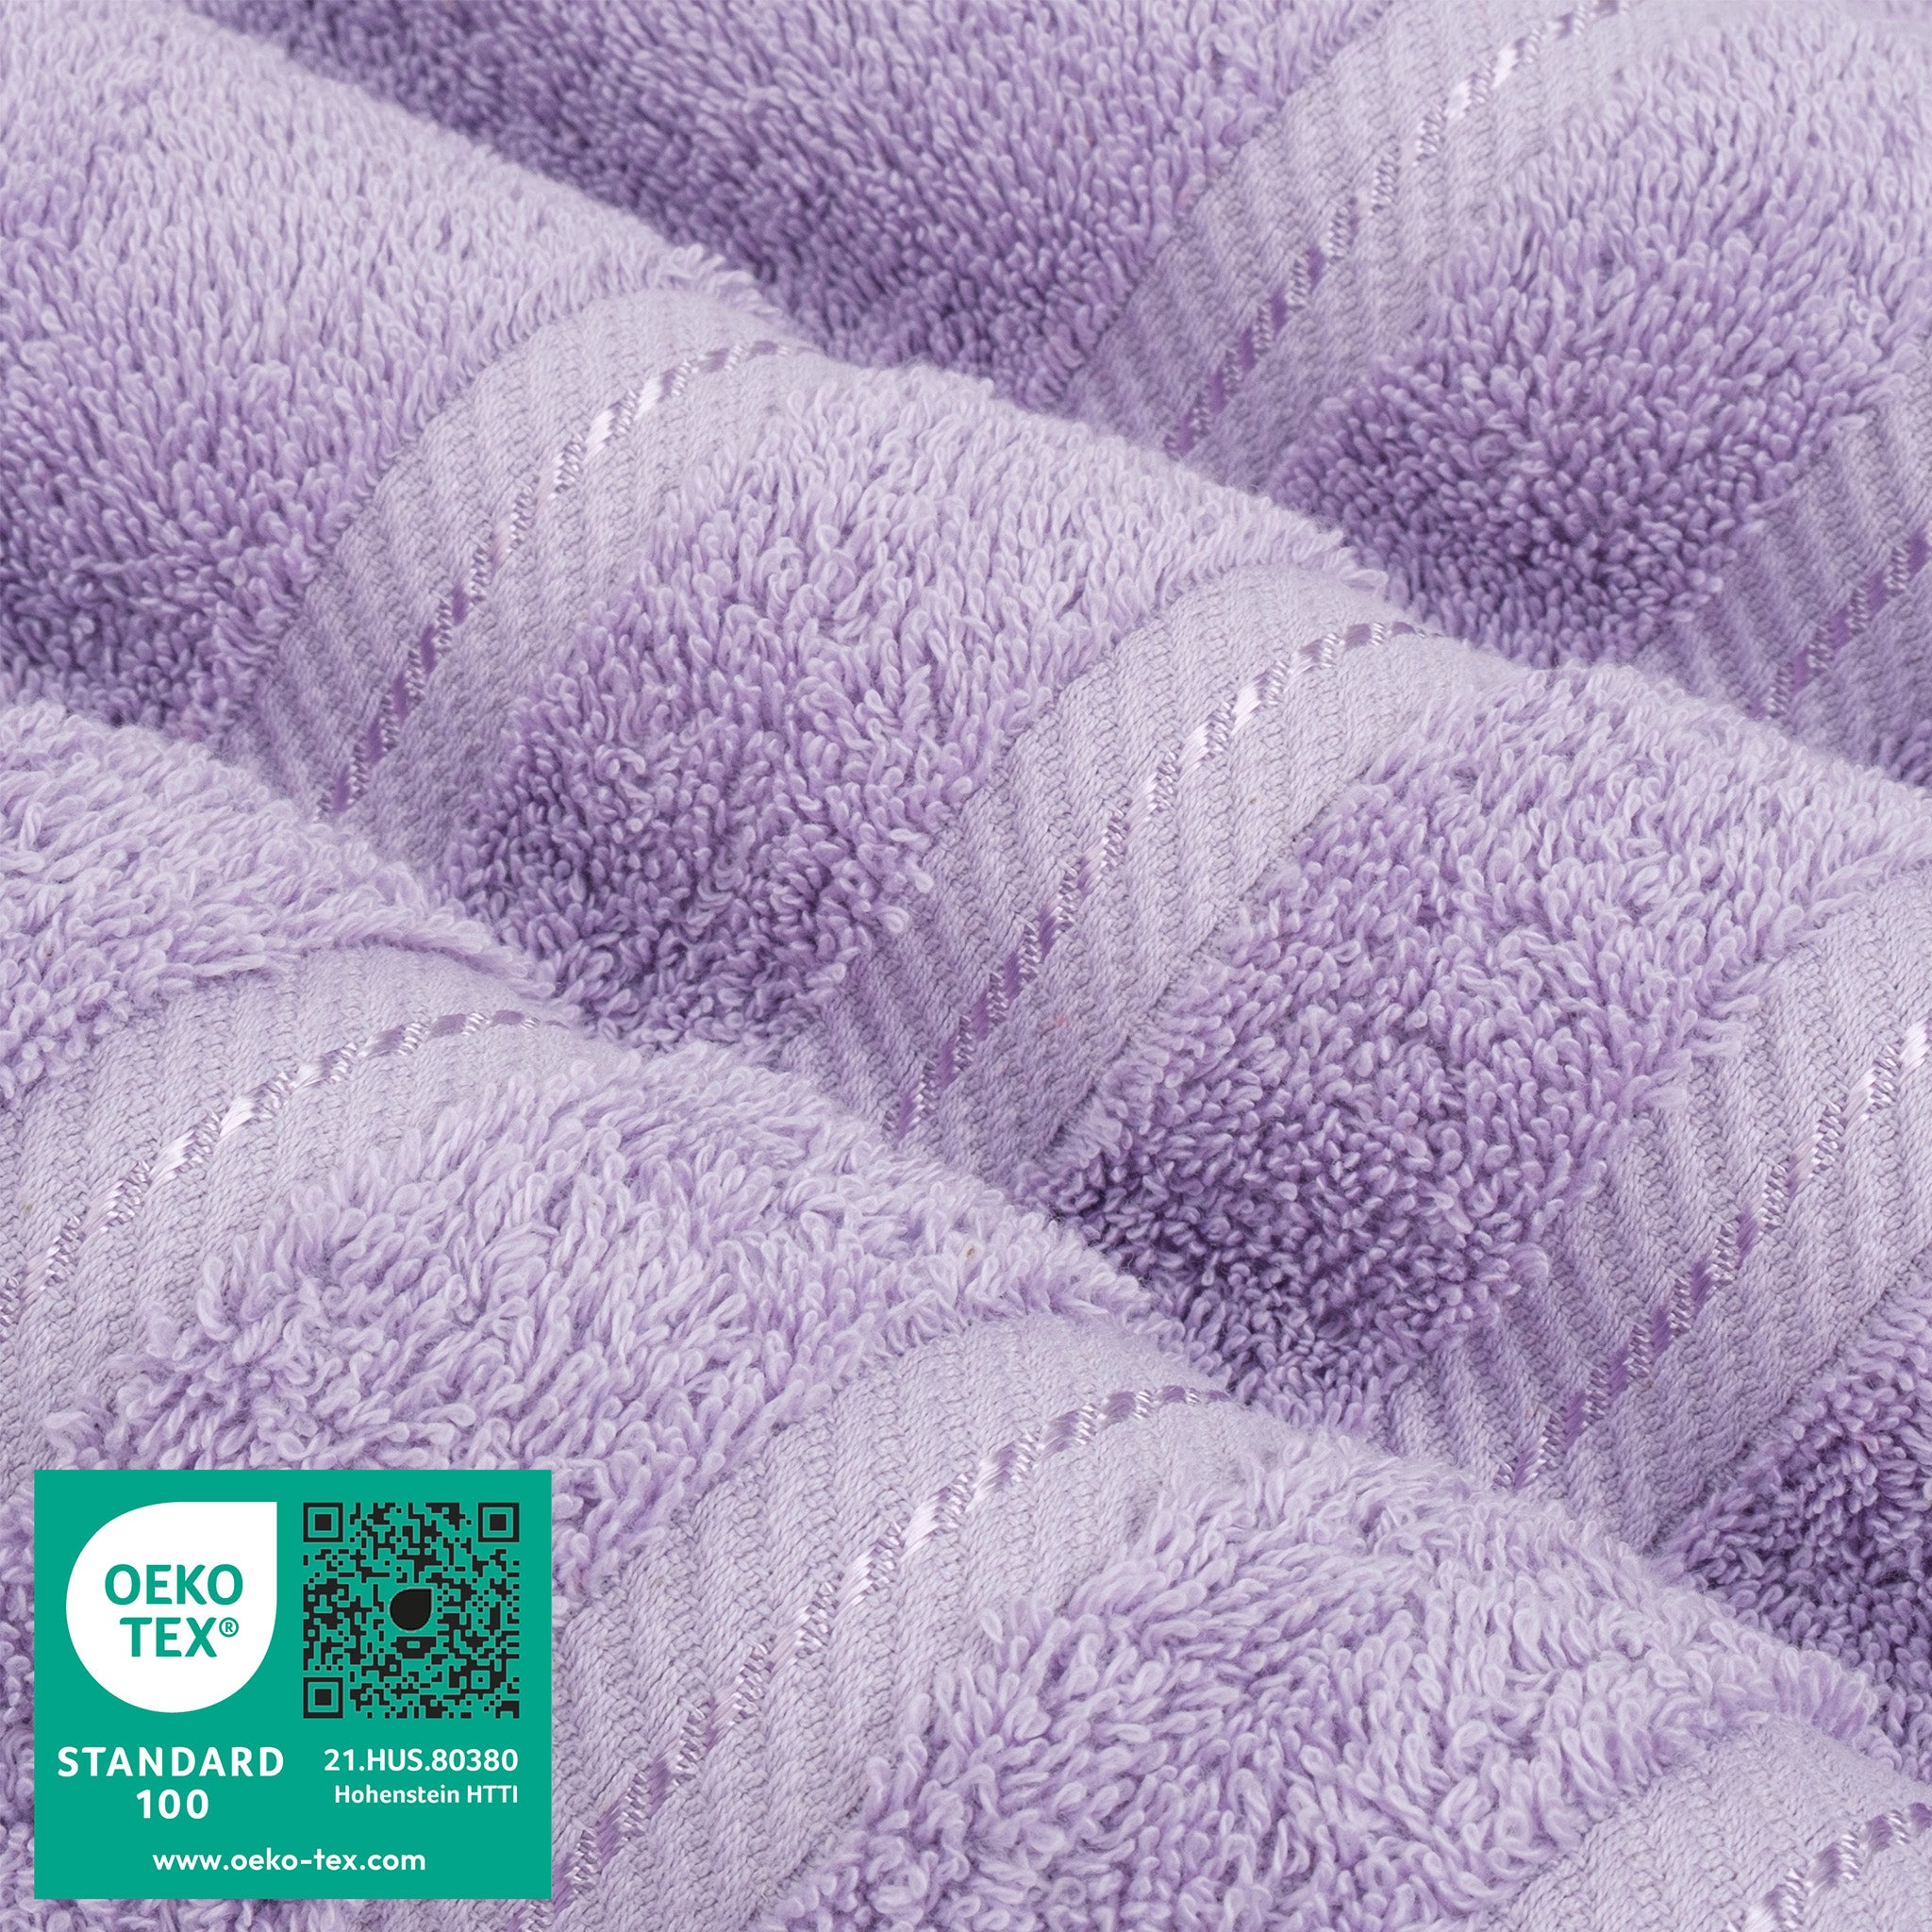 American Soft Linen 100% Turkish Cotton 4 Pack Hand Towel Set Wholesale lilac-3